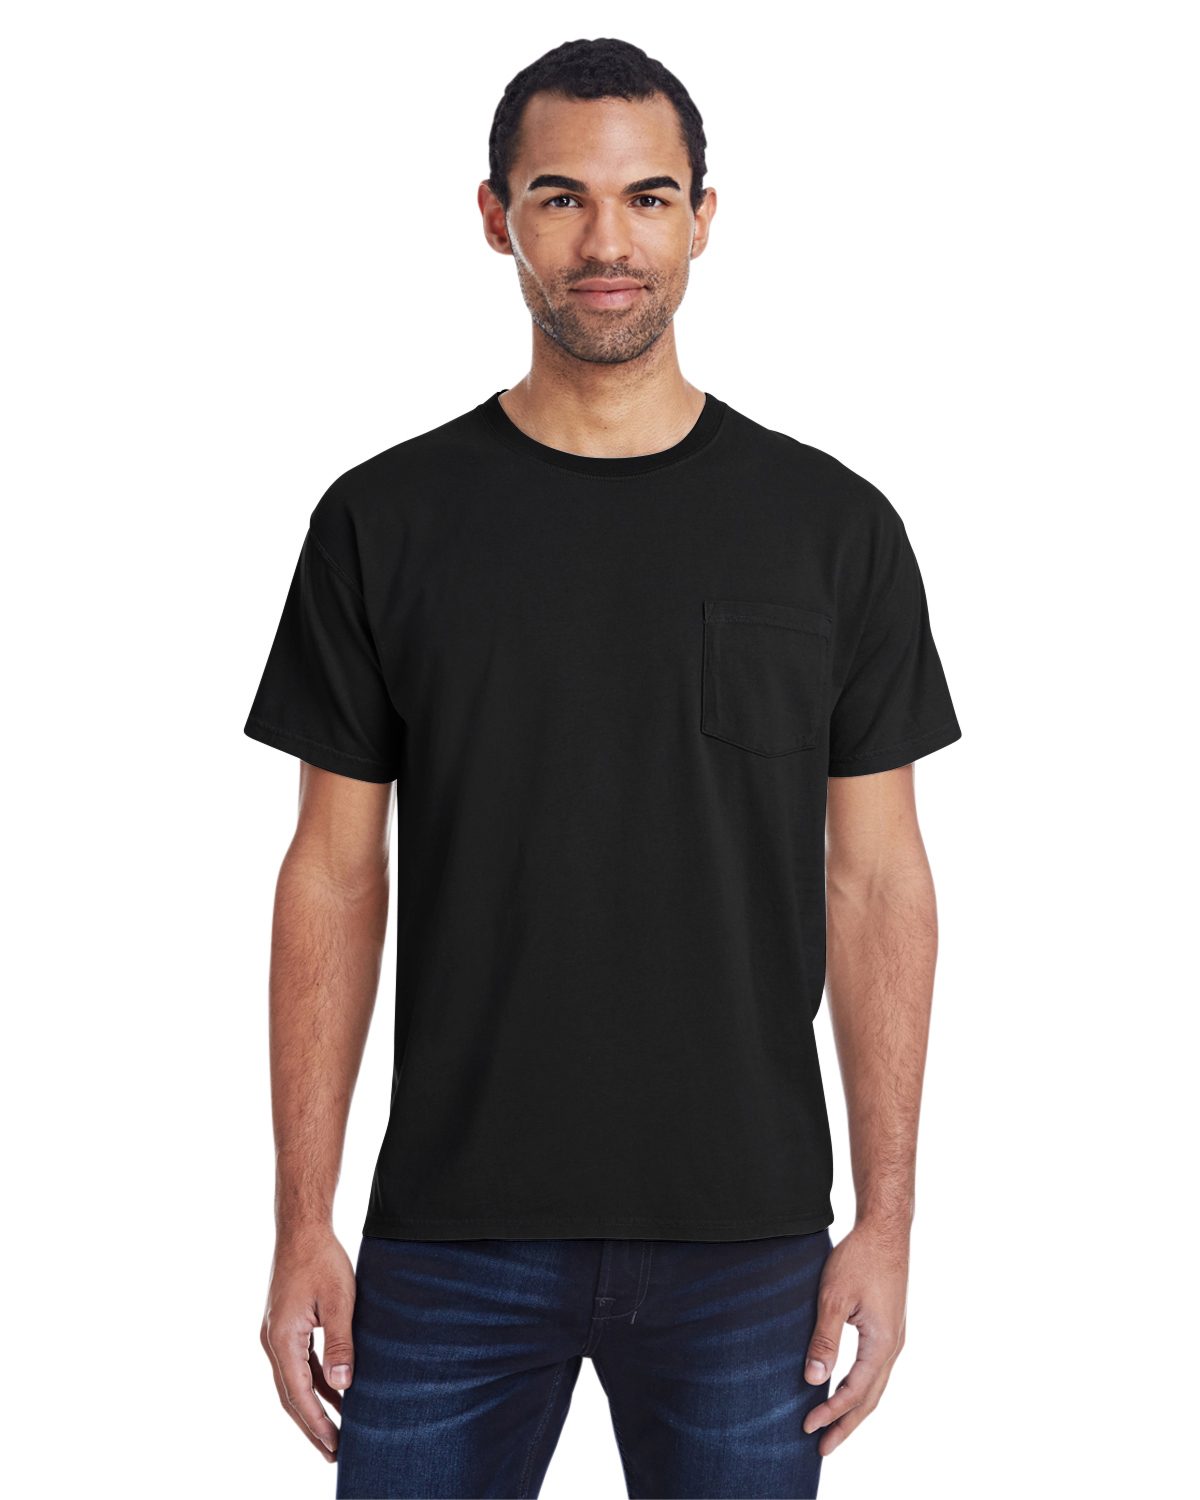 ComfortWash by Unisex 5.5 | Ringspun T-Shirt Garment-Dyed Cotton Hanes | GDH150 Pocket oz., 100% with ShirtSpace